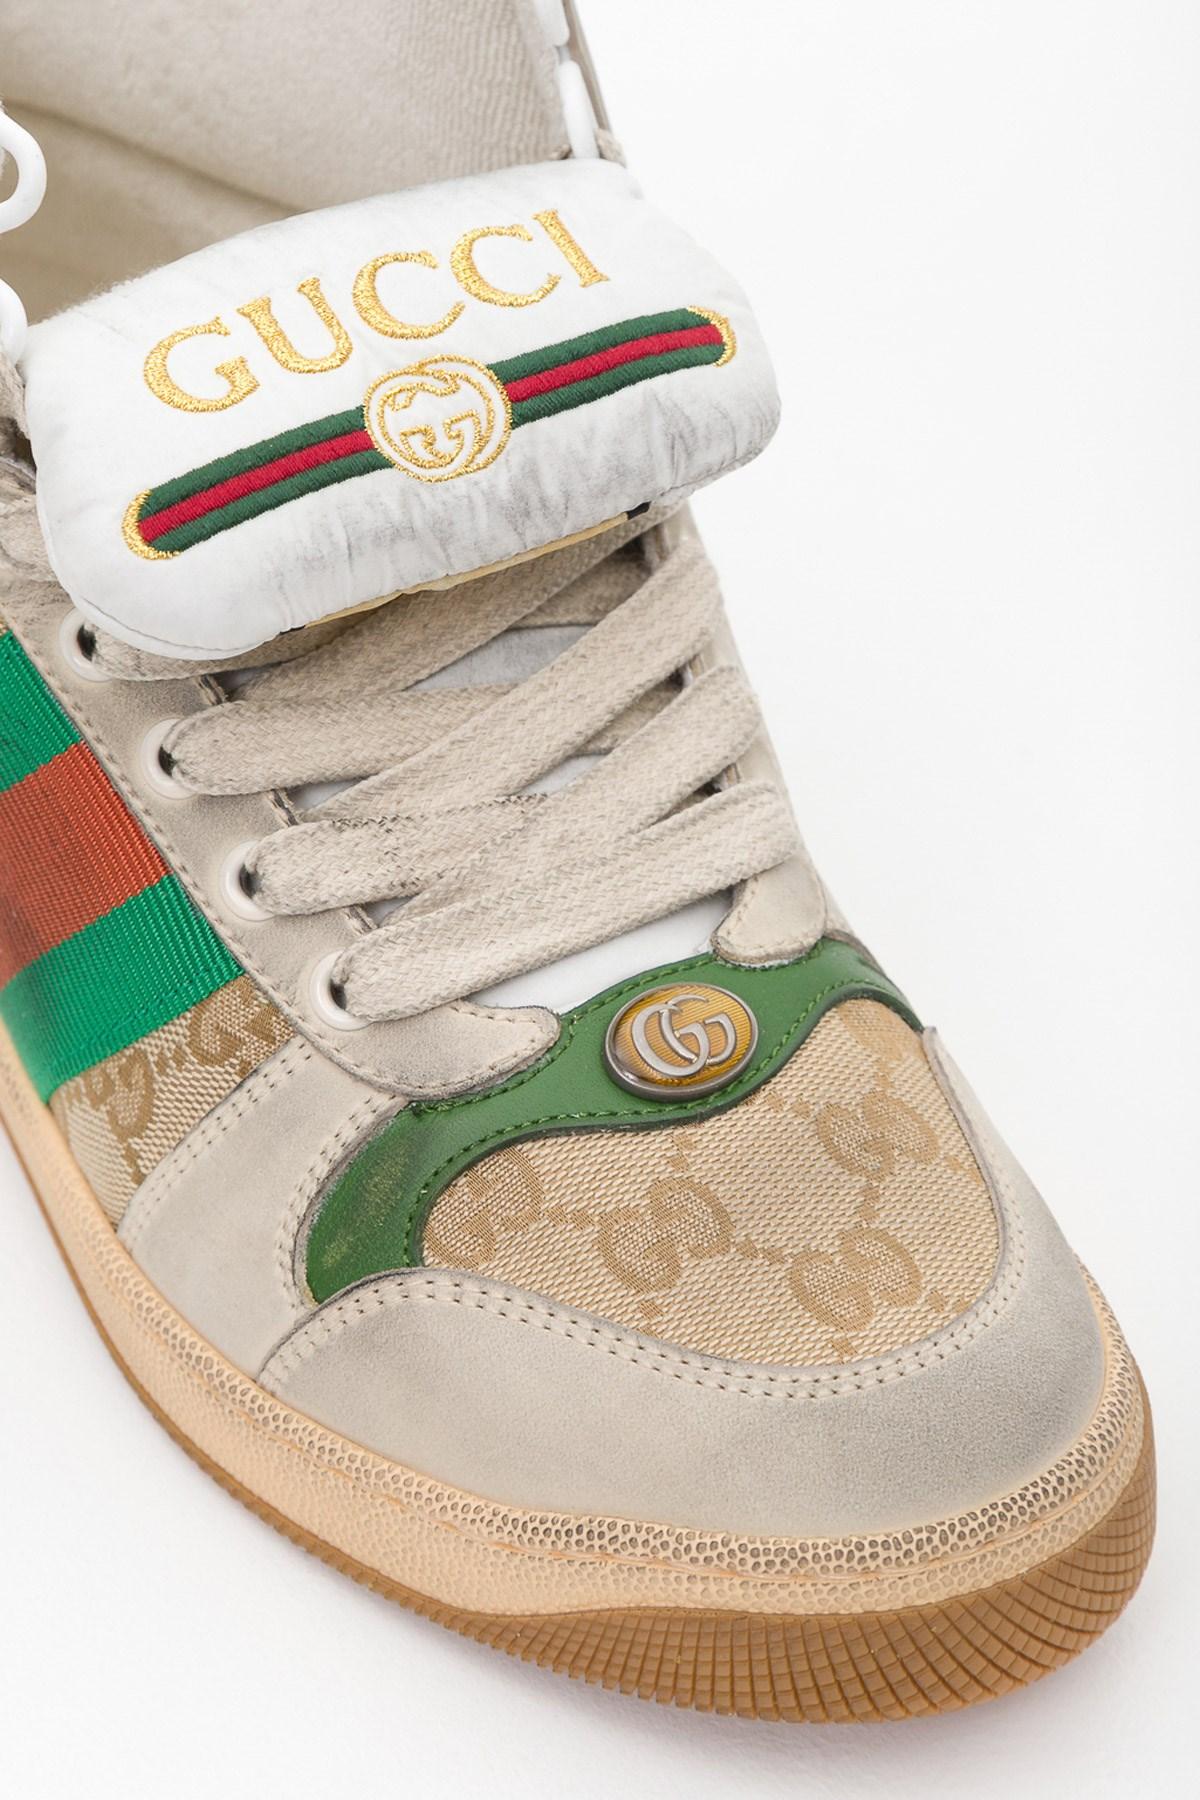 Gucci Canvas Screener High-top Sneaker for Men - Lyst